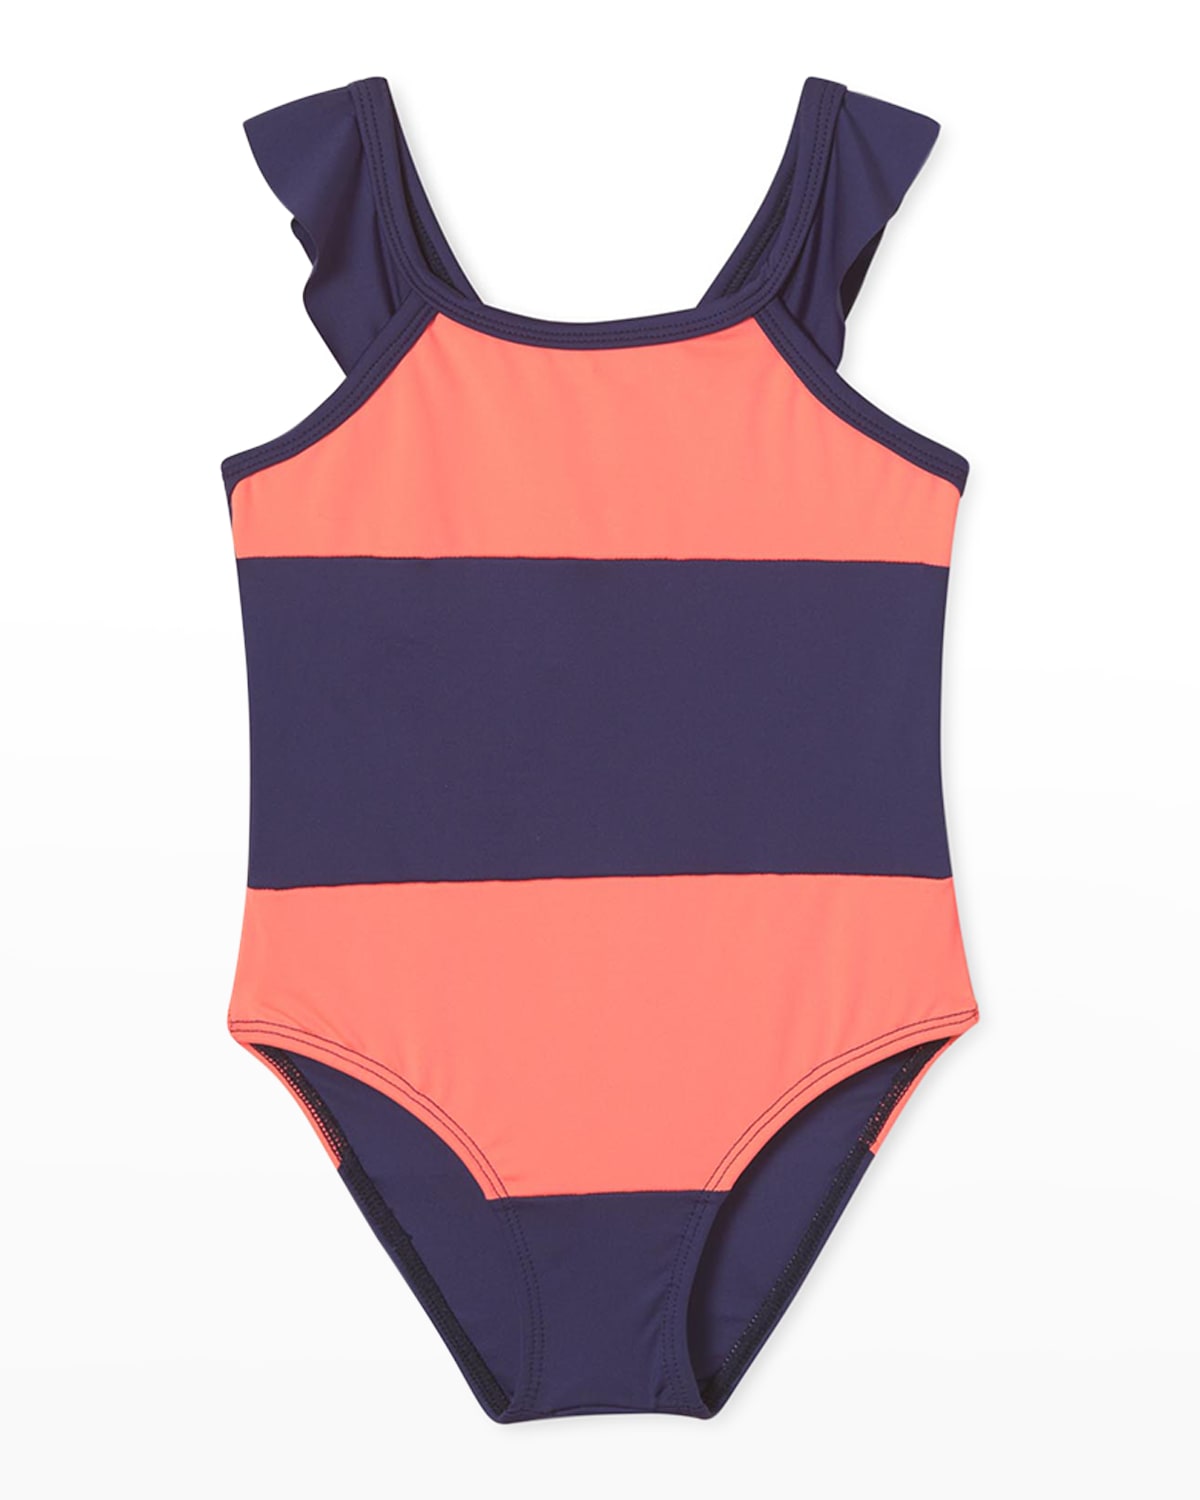 Rishine Womens One-Piece Swimsuits Summer Casual Dot Print Ruffled Sleeve Off Shoulder Monokini Bikini